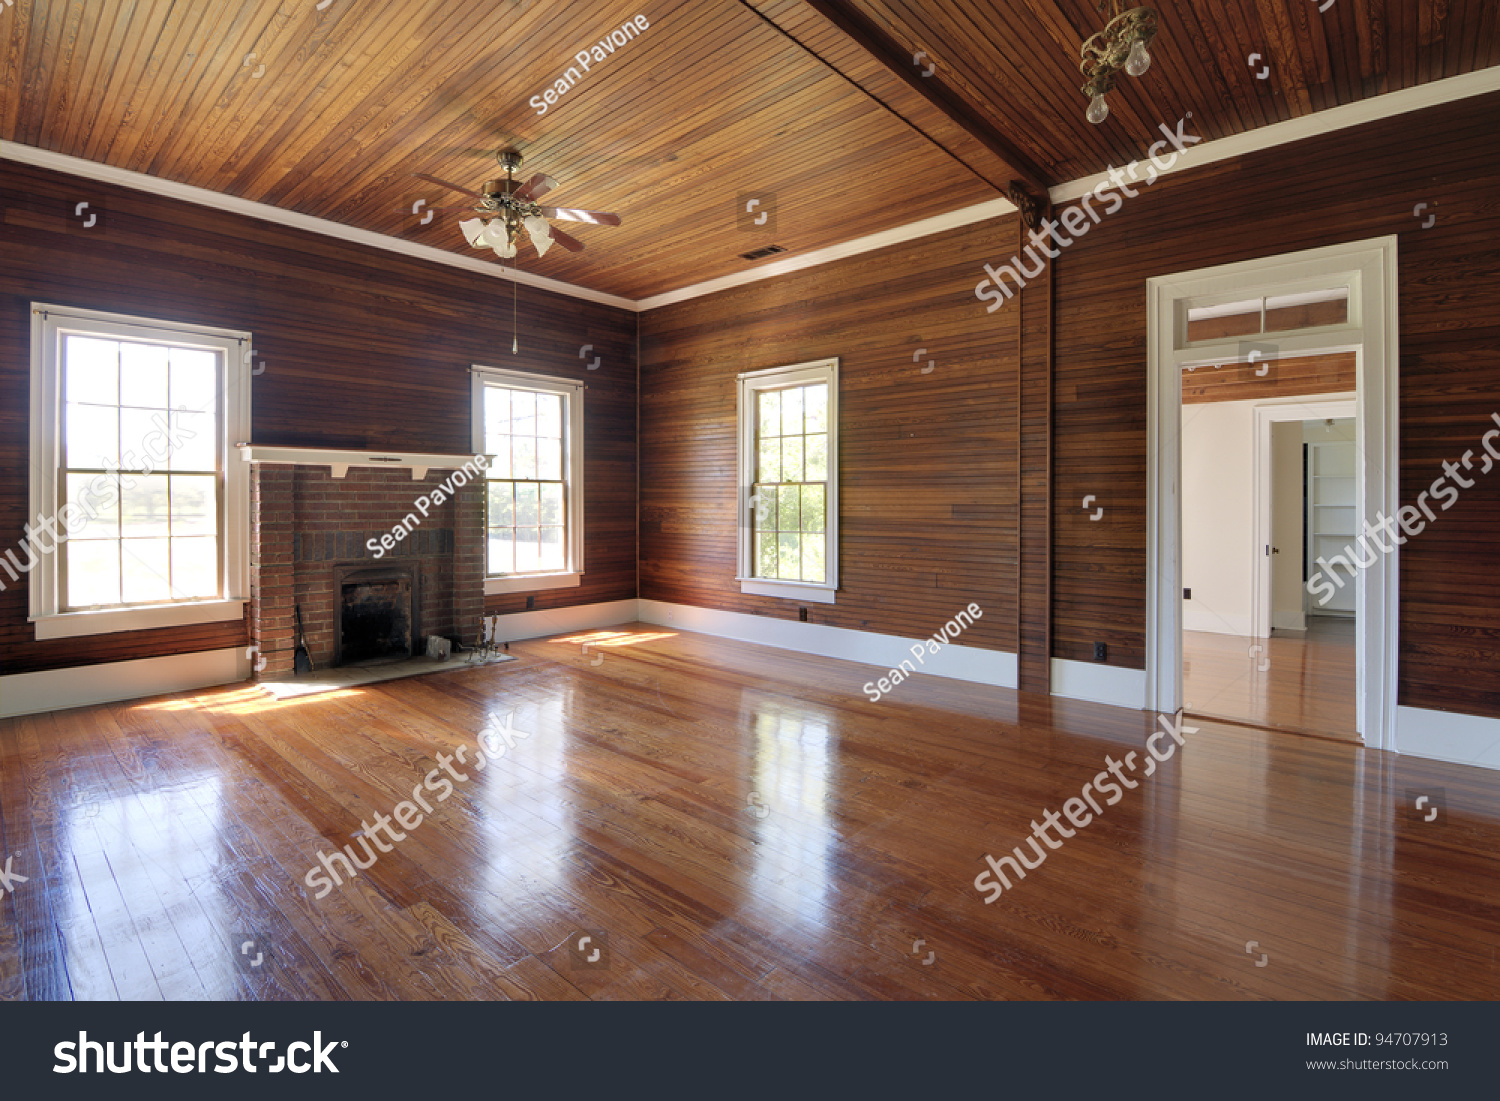 Unfurnished Living Room Wood Paneling Stock Photo 94707913